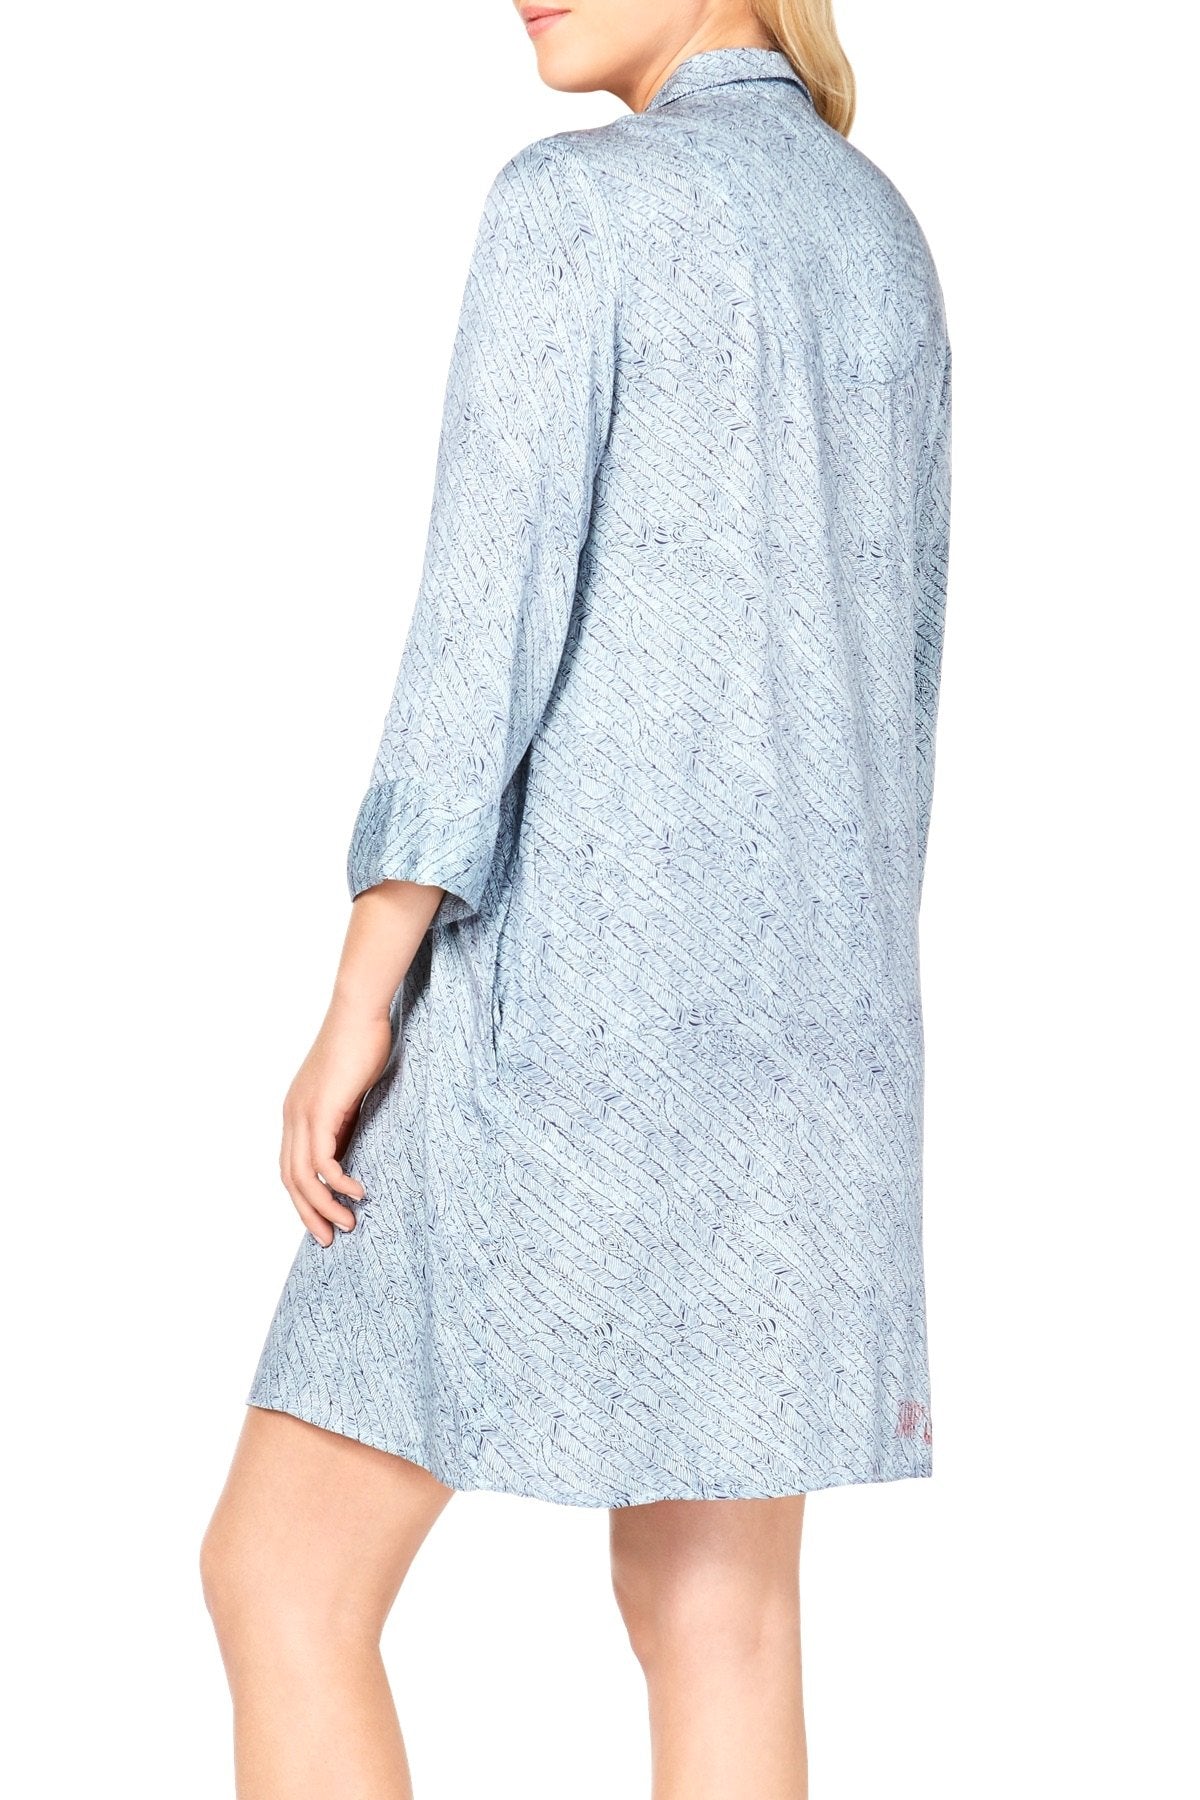 Sesoire Blue Feather Printed Sleepshirt Nightgown